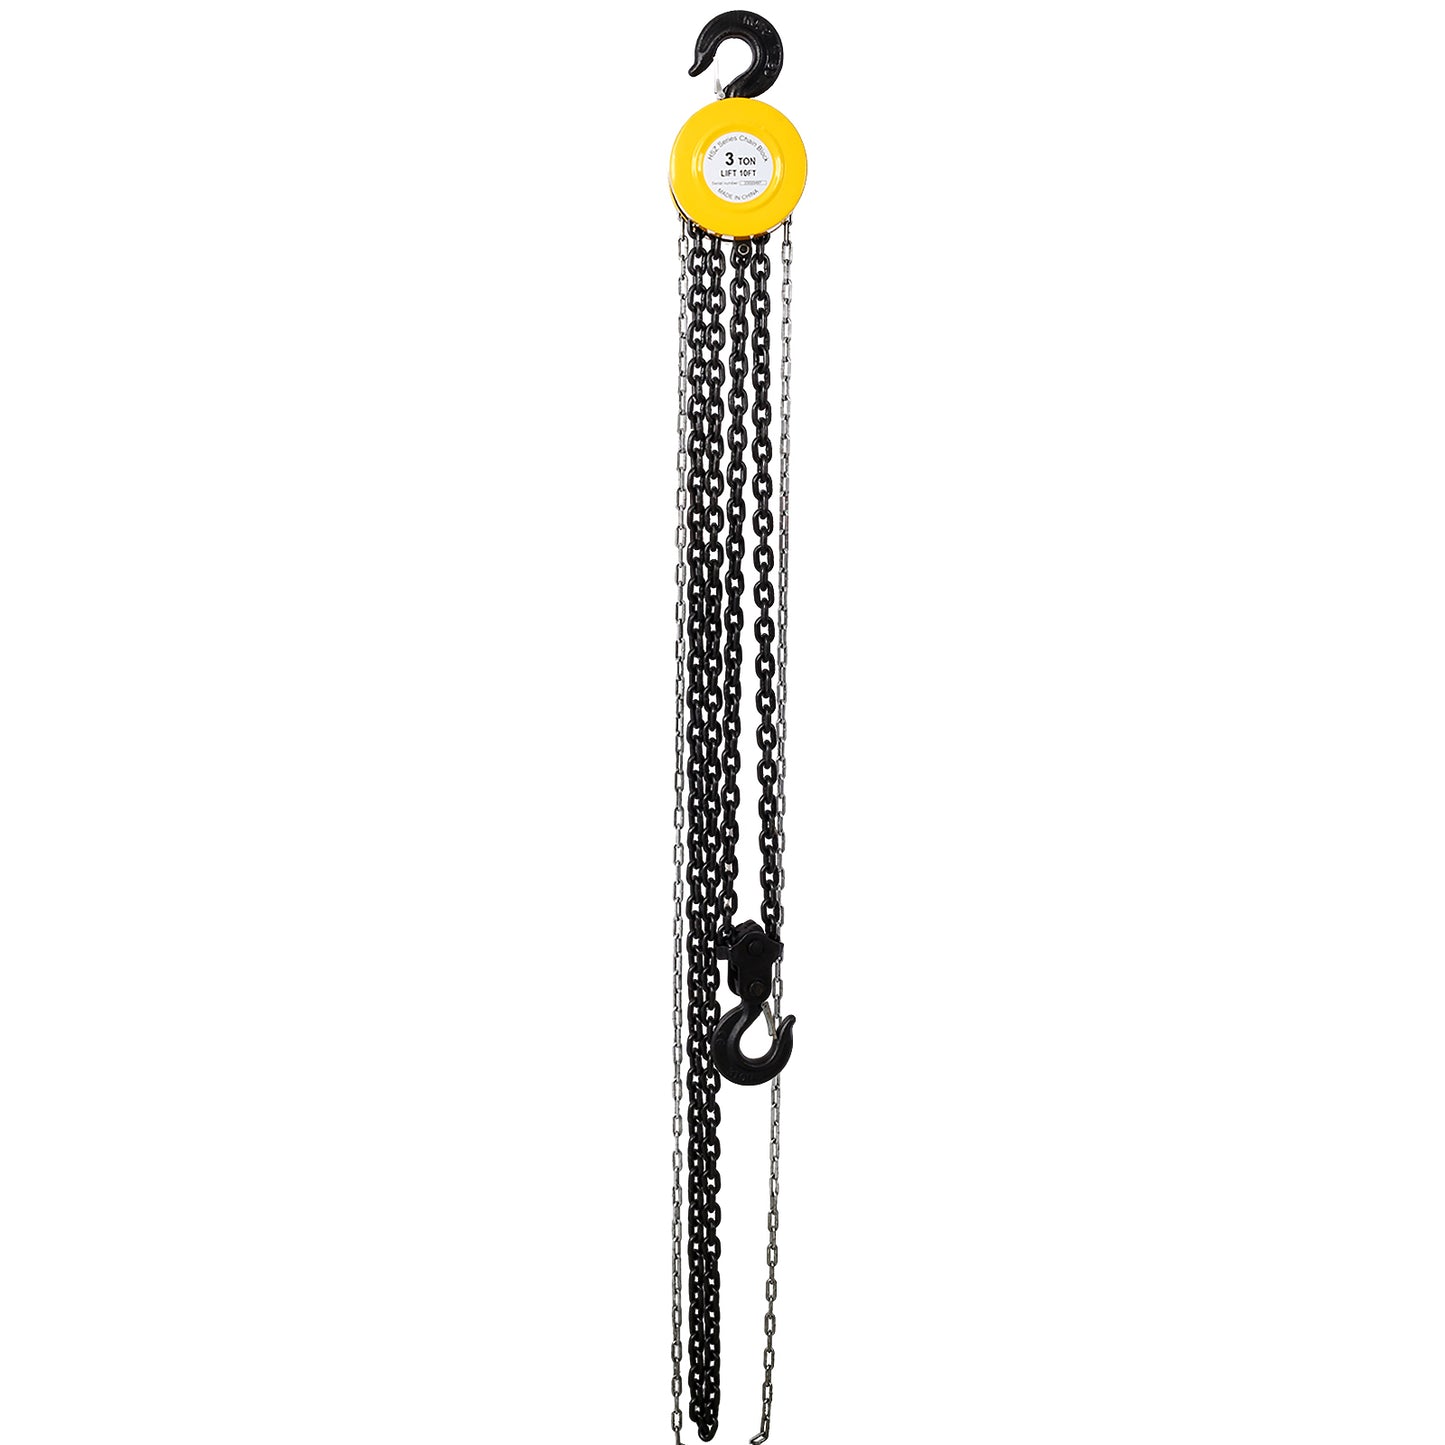 Chain hoist 11000lbs 5T capacity 10ft wIth 2 heavy duty hooks,Manual chain hoist steel construction,Yellow